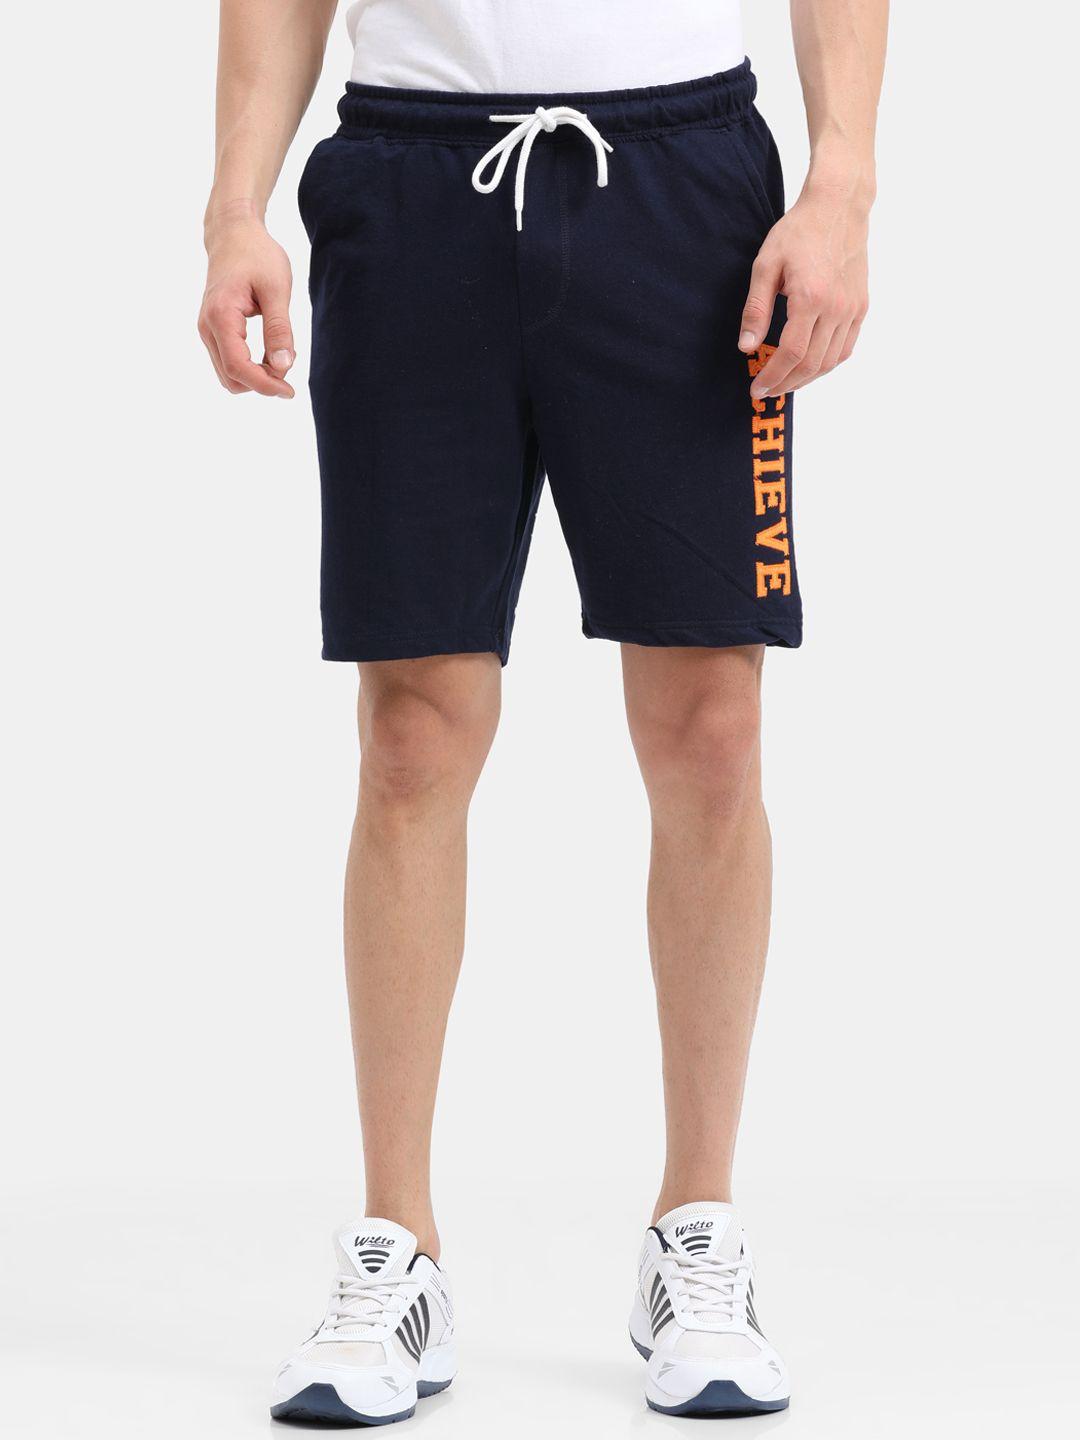 ardeur-men-navy-blue-training-or-gym-sports-shorts